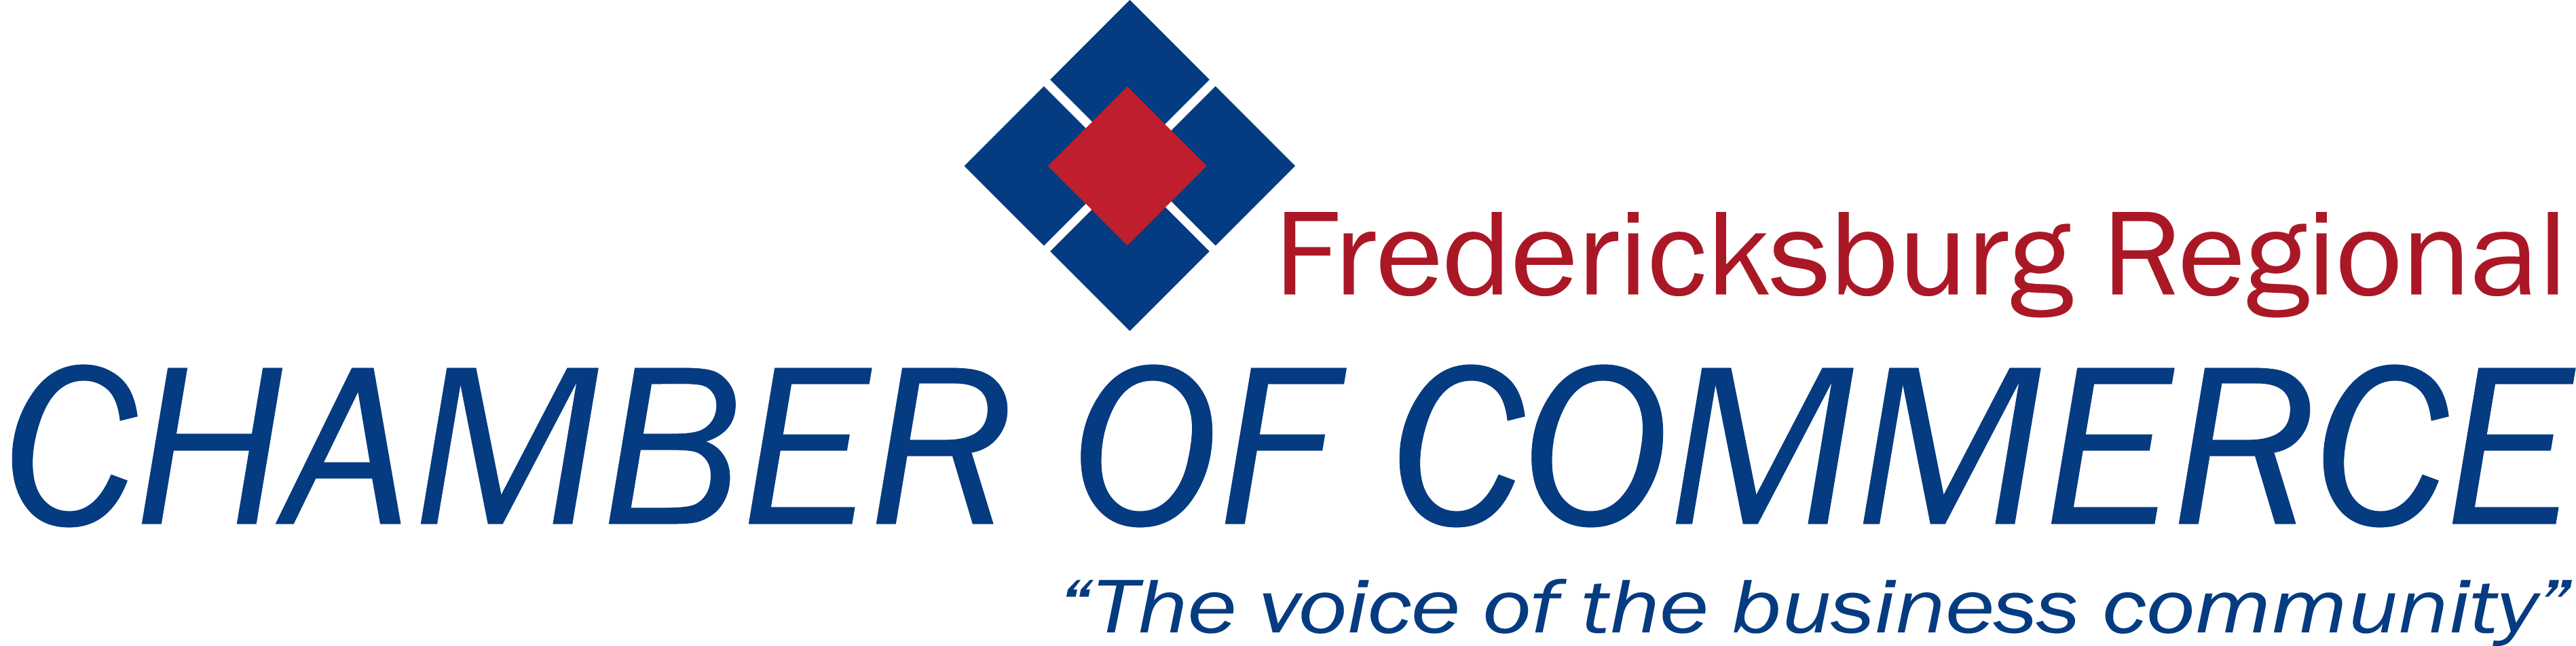 Fredericksburg Chamber of Commerce | We mean business